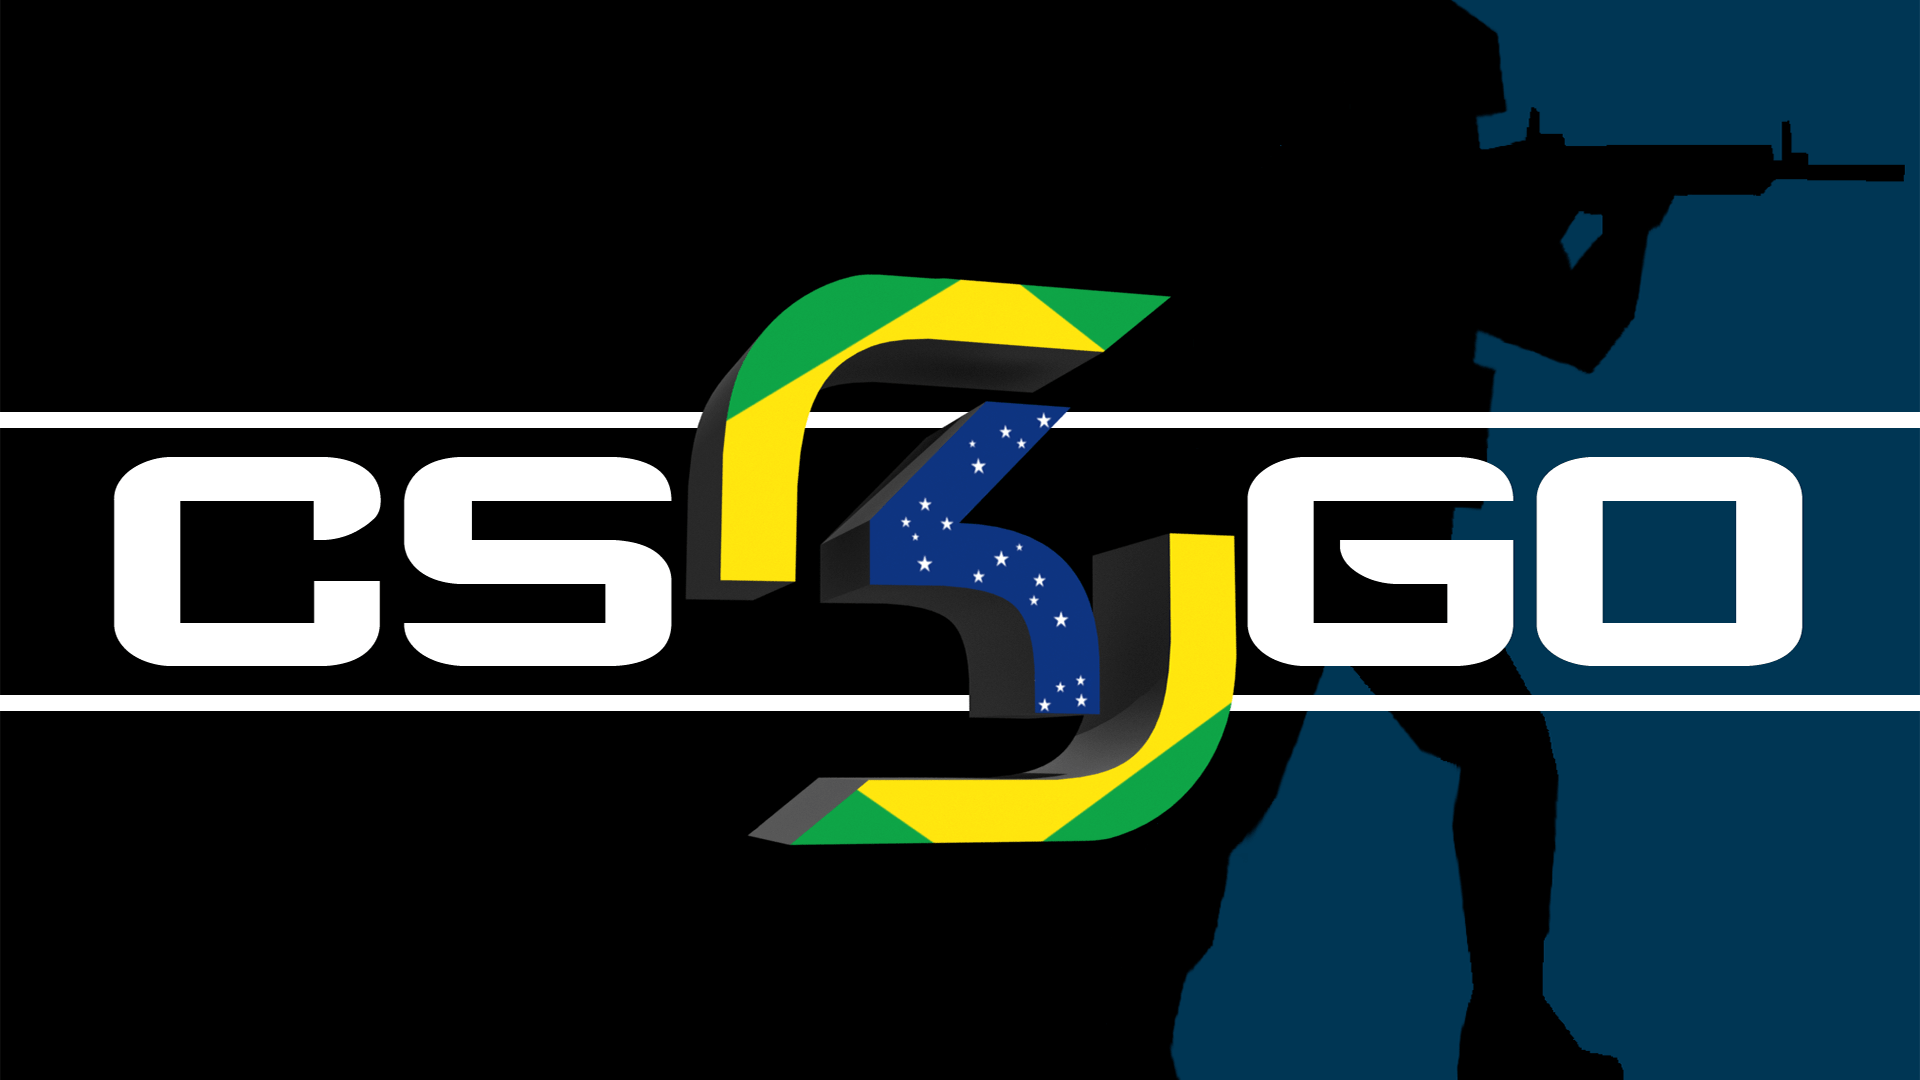 SK TEAM Brazilian Wallpaper. CS:GO Wallpaper and Background